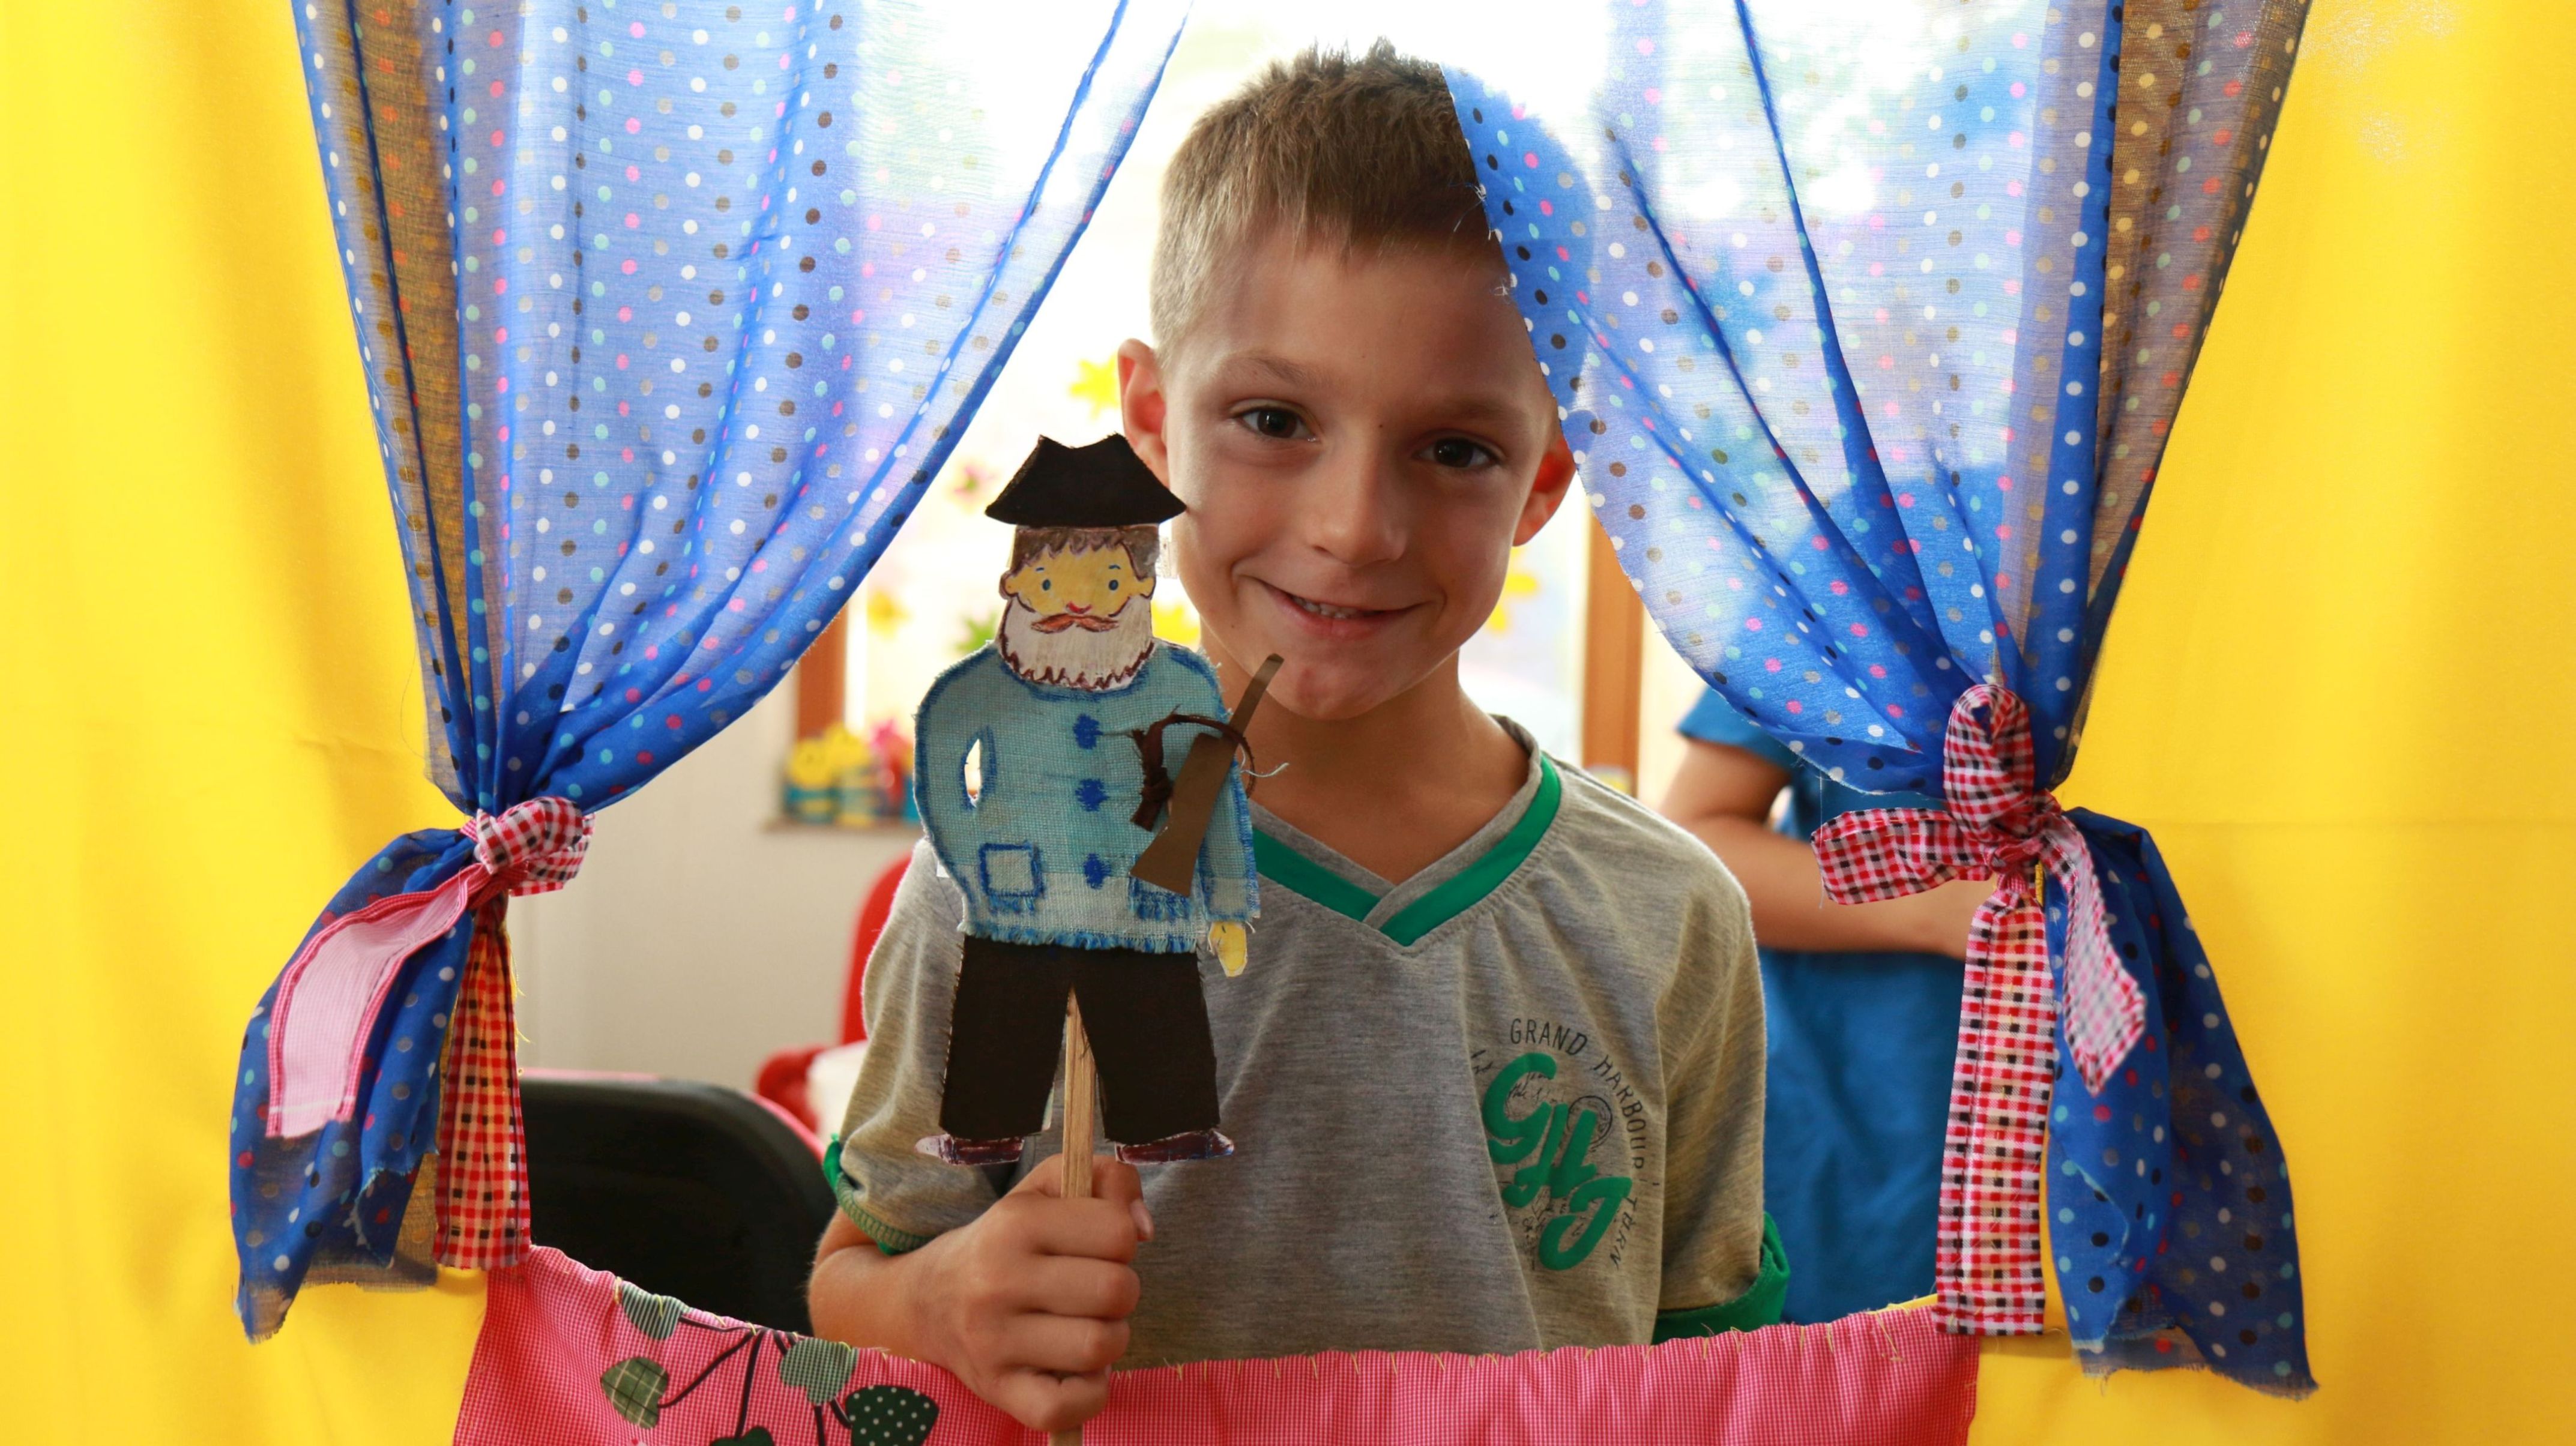 David participates in a small-scale puppet show